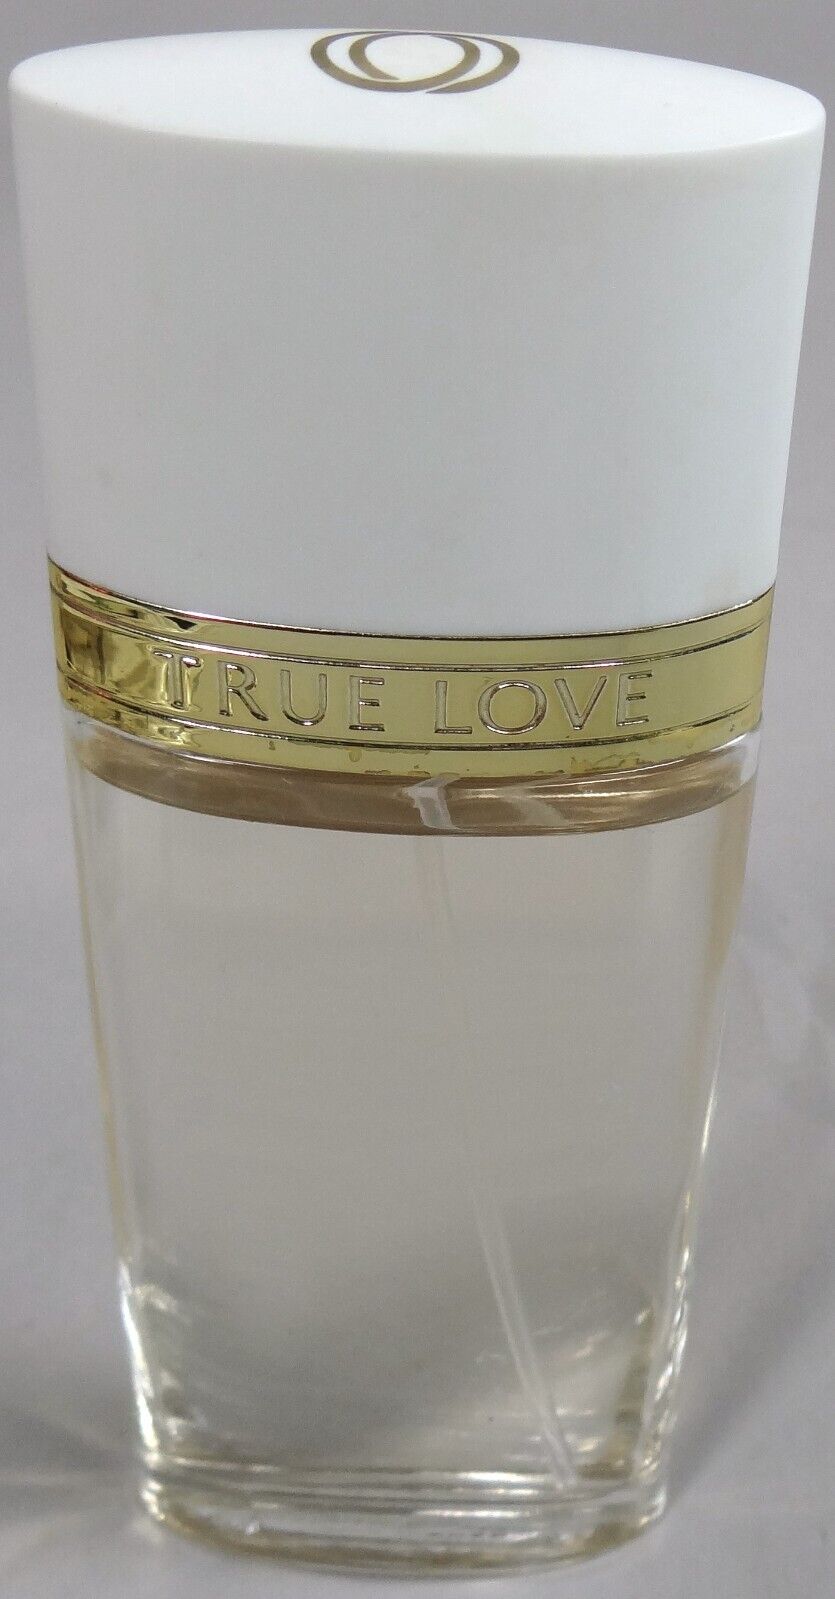 True Love Perfume EDT Elizabeth Arden Vtg 90s 1.7 oz 50ml Powdery Floral Woody